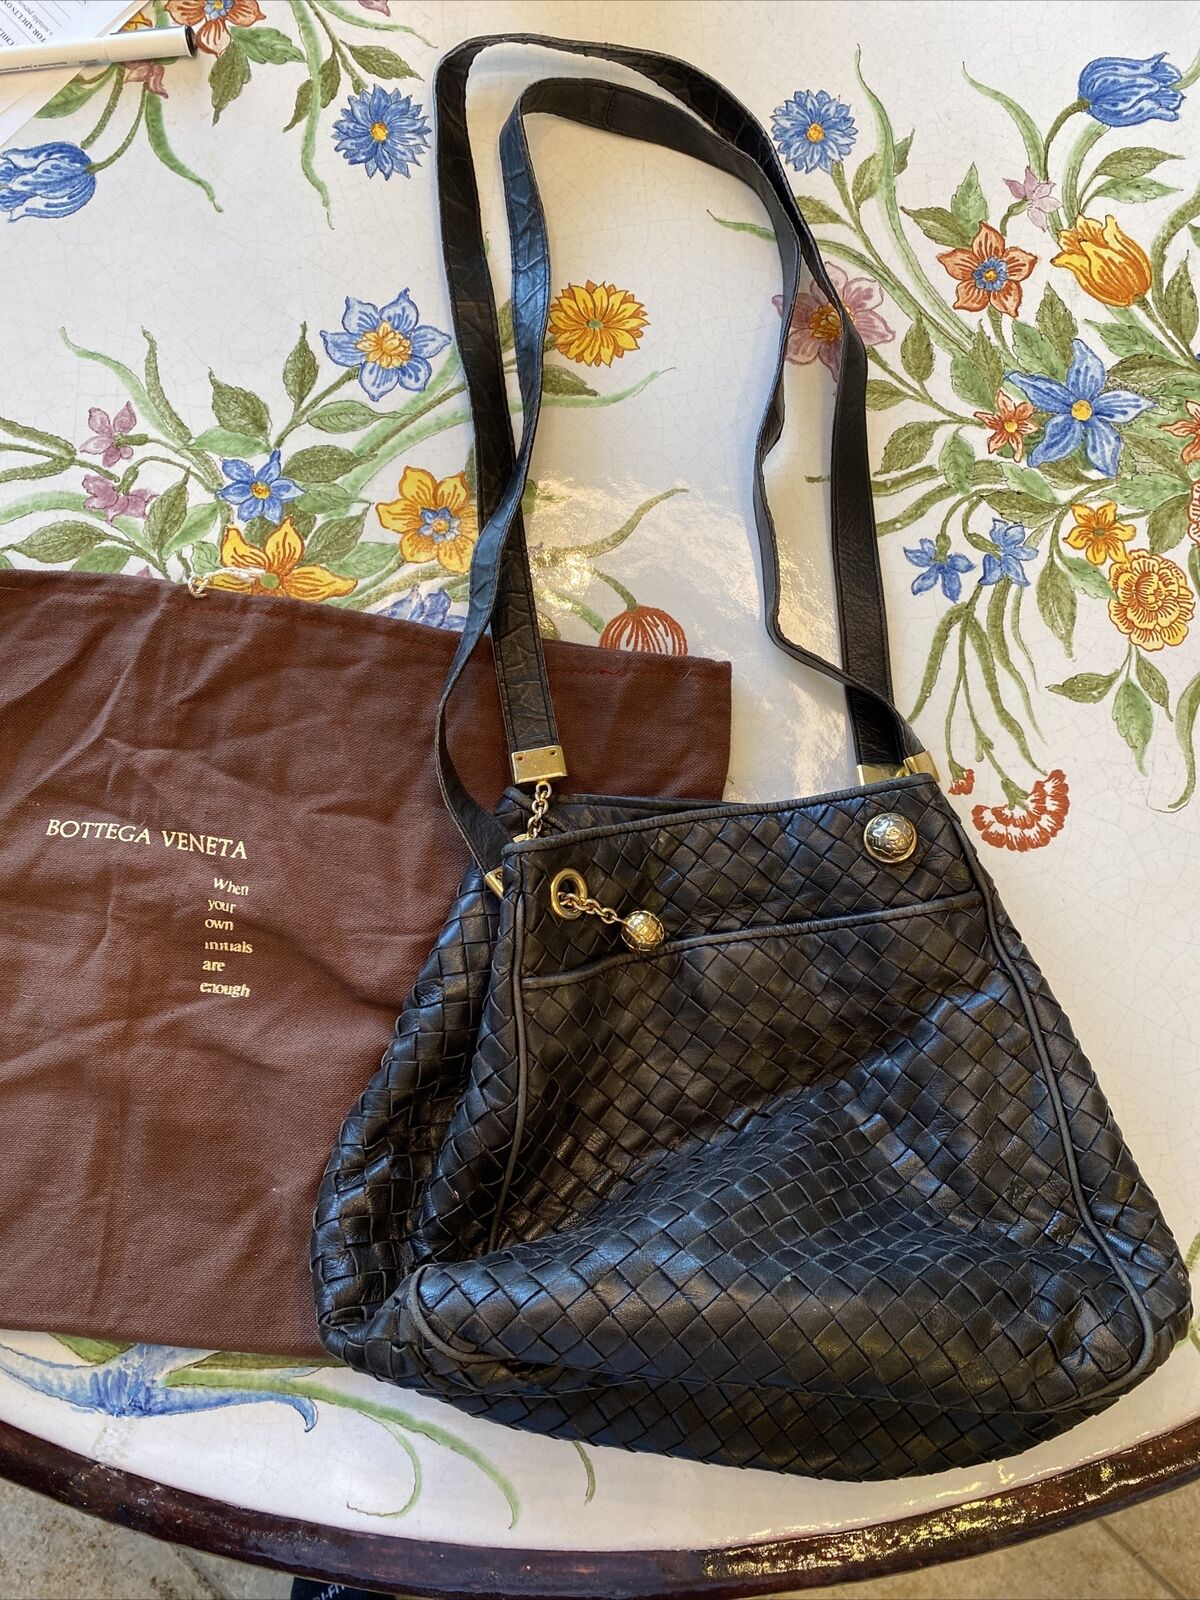 Bottega Veneta Black Leather Shoulder Bag Purse Authentic Vintage